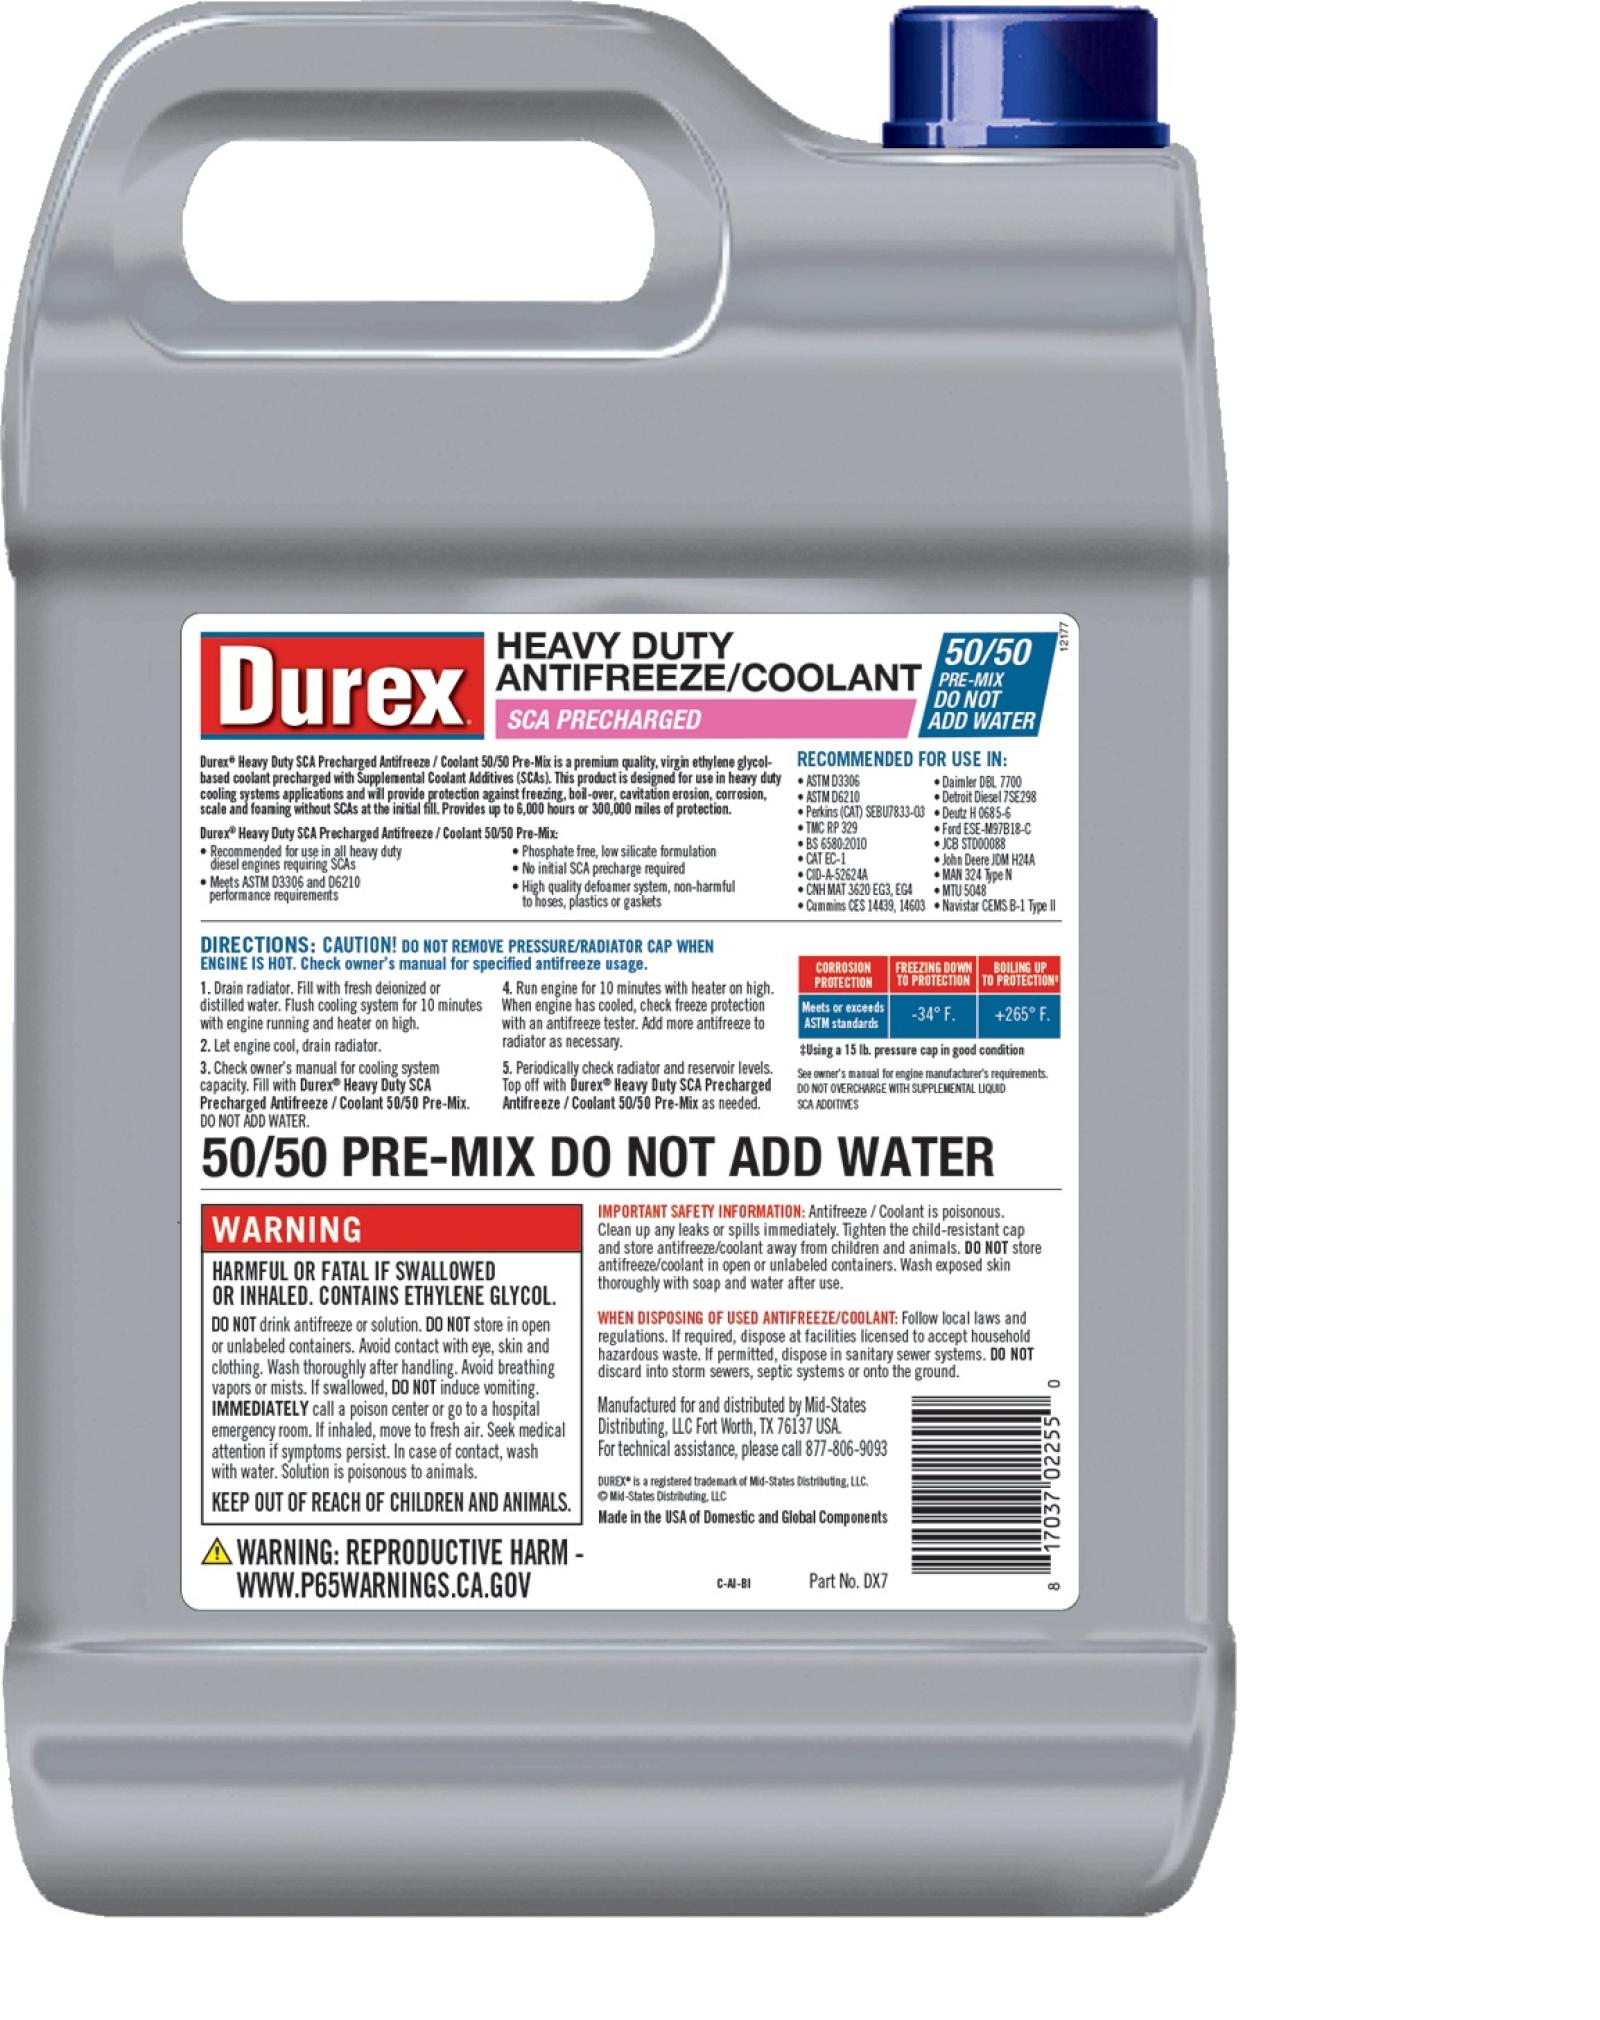 Durex® Heavy Duty SCA Pre-charged Formula 50/50 Antifreeze/Coolant